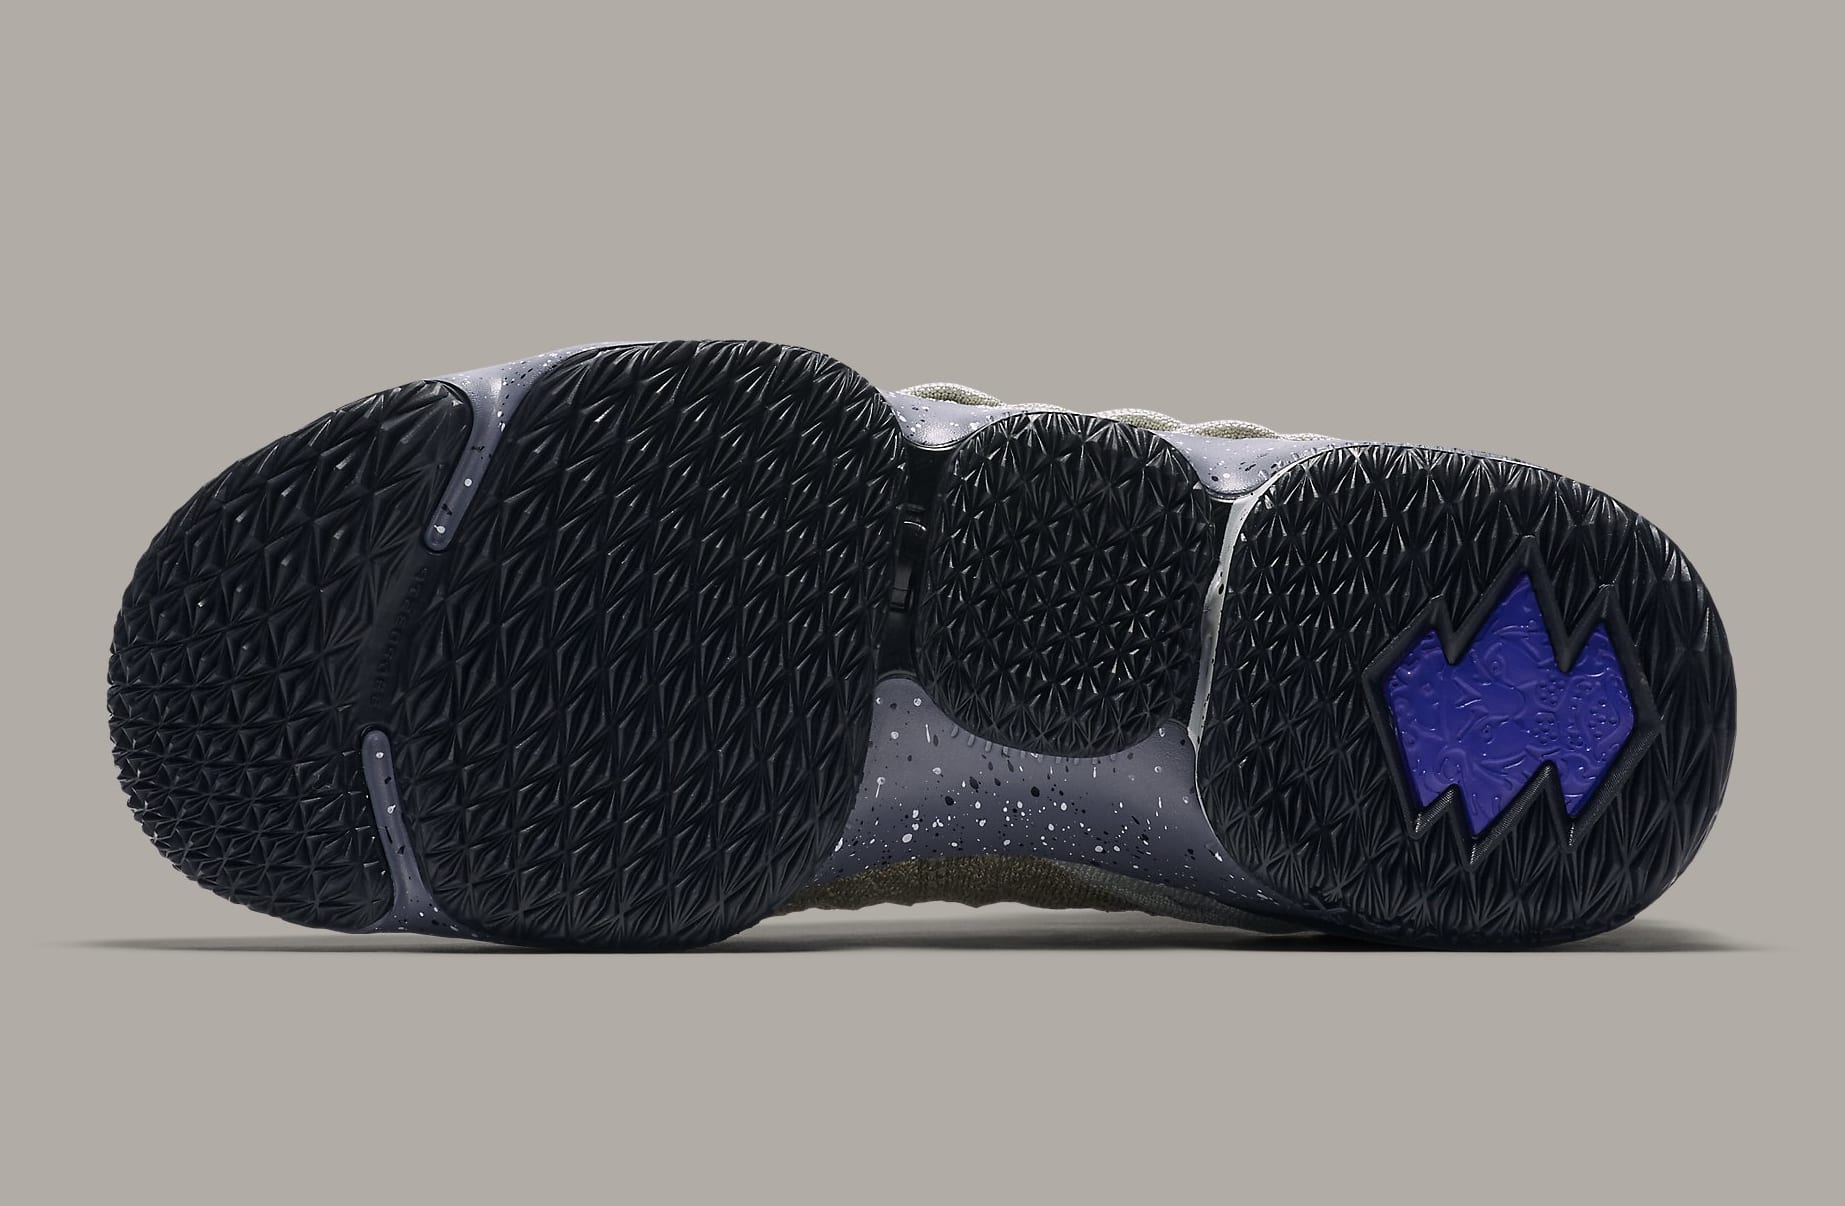 Nike LeBron 15 Mowabb Release Date AR4831-900 Sole